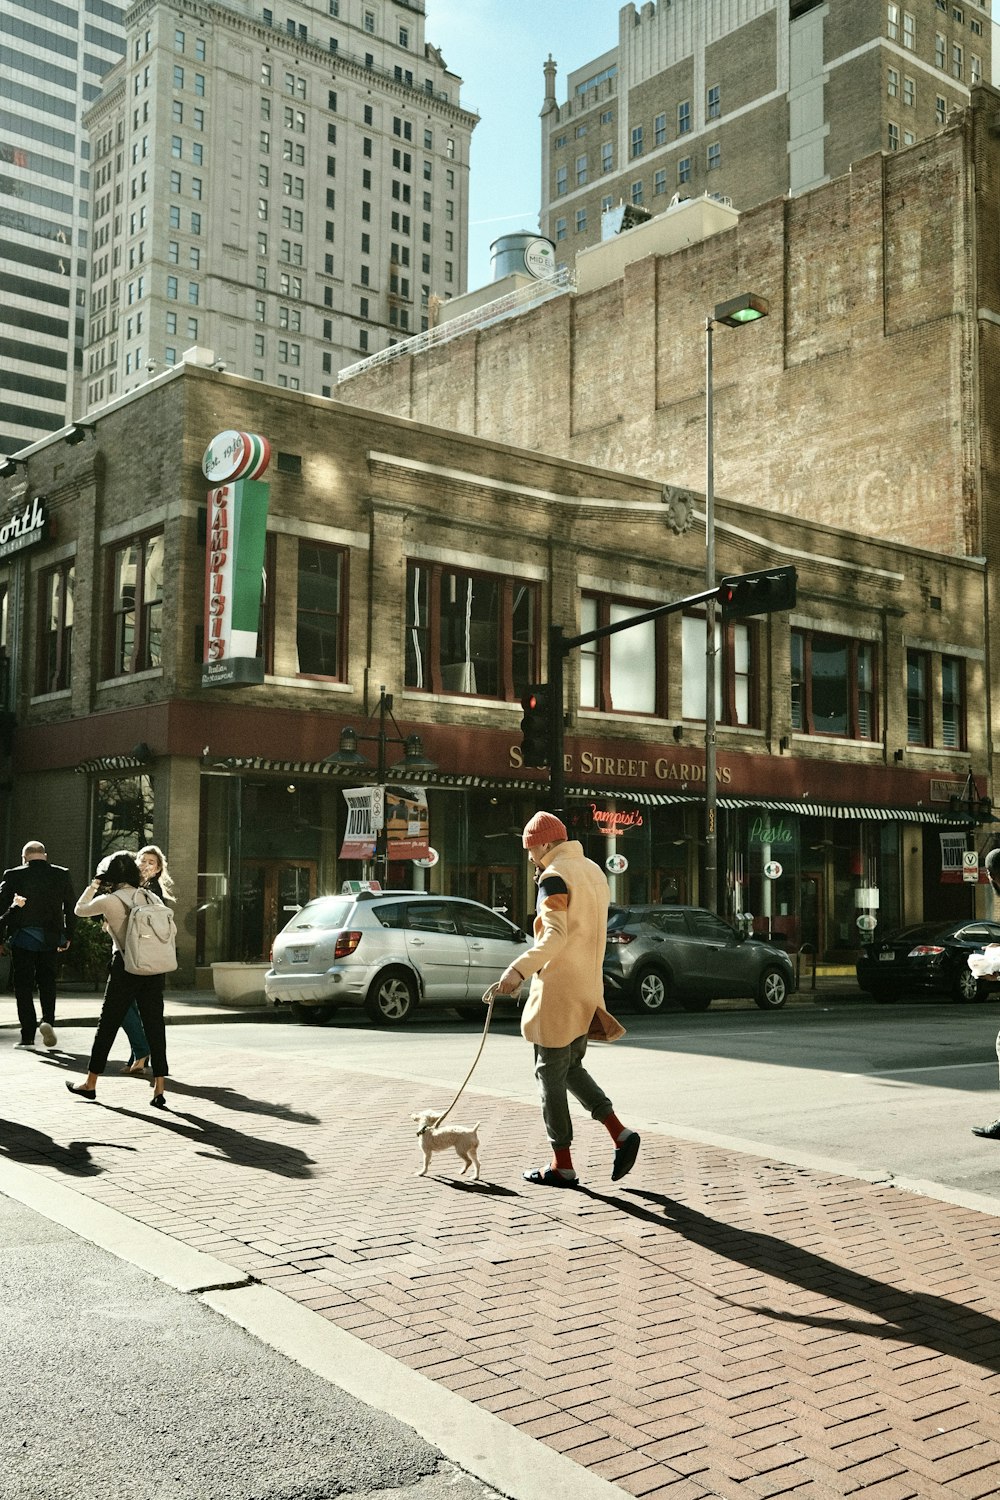 a man walking a dog on a city street